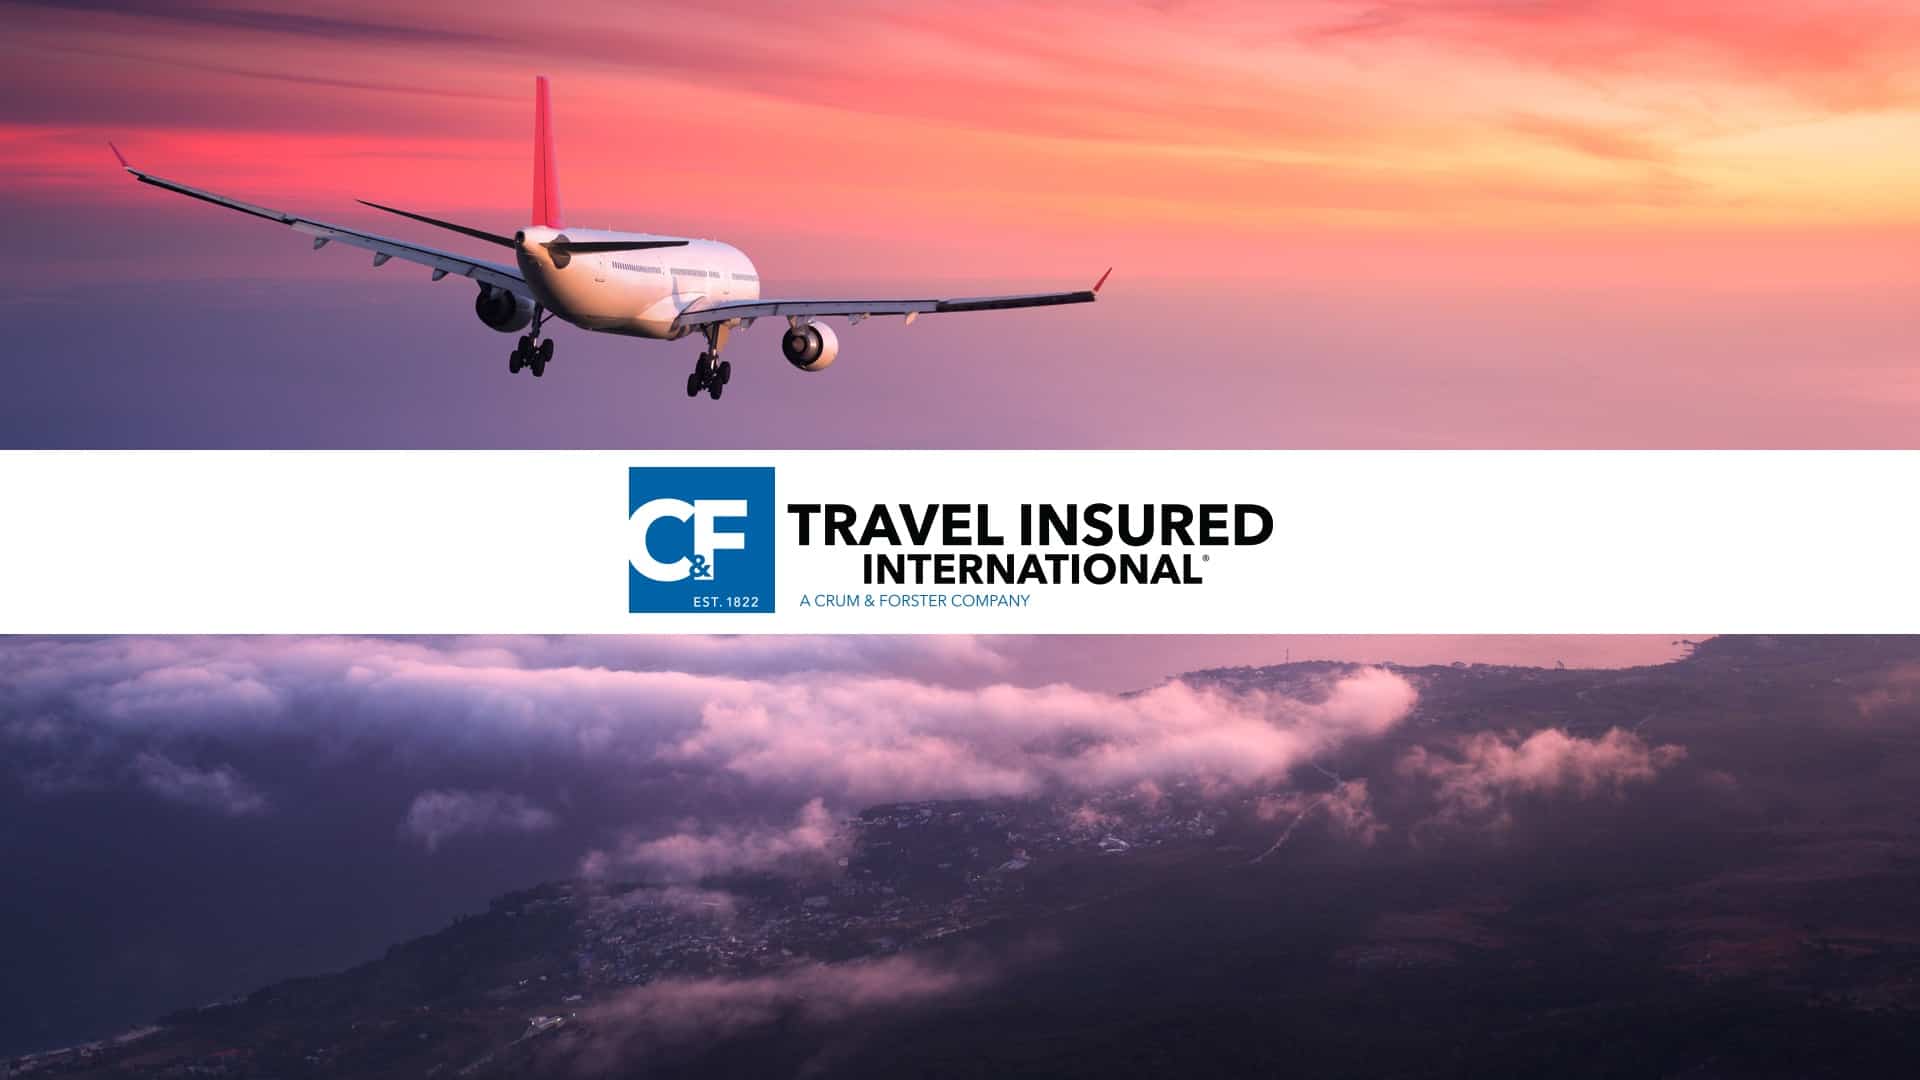 is travel insured international a good company